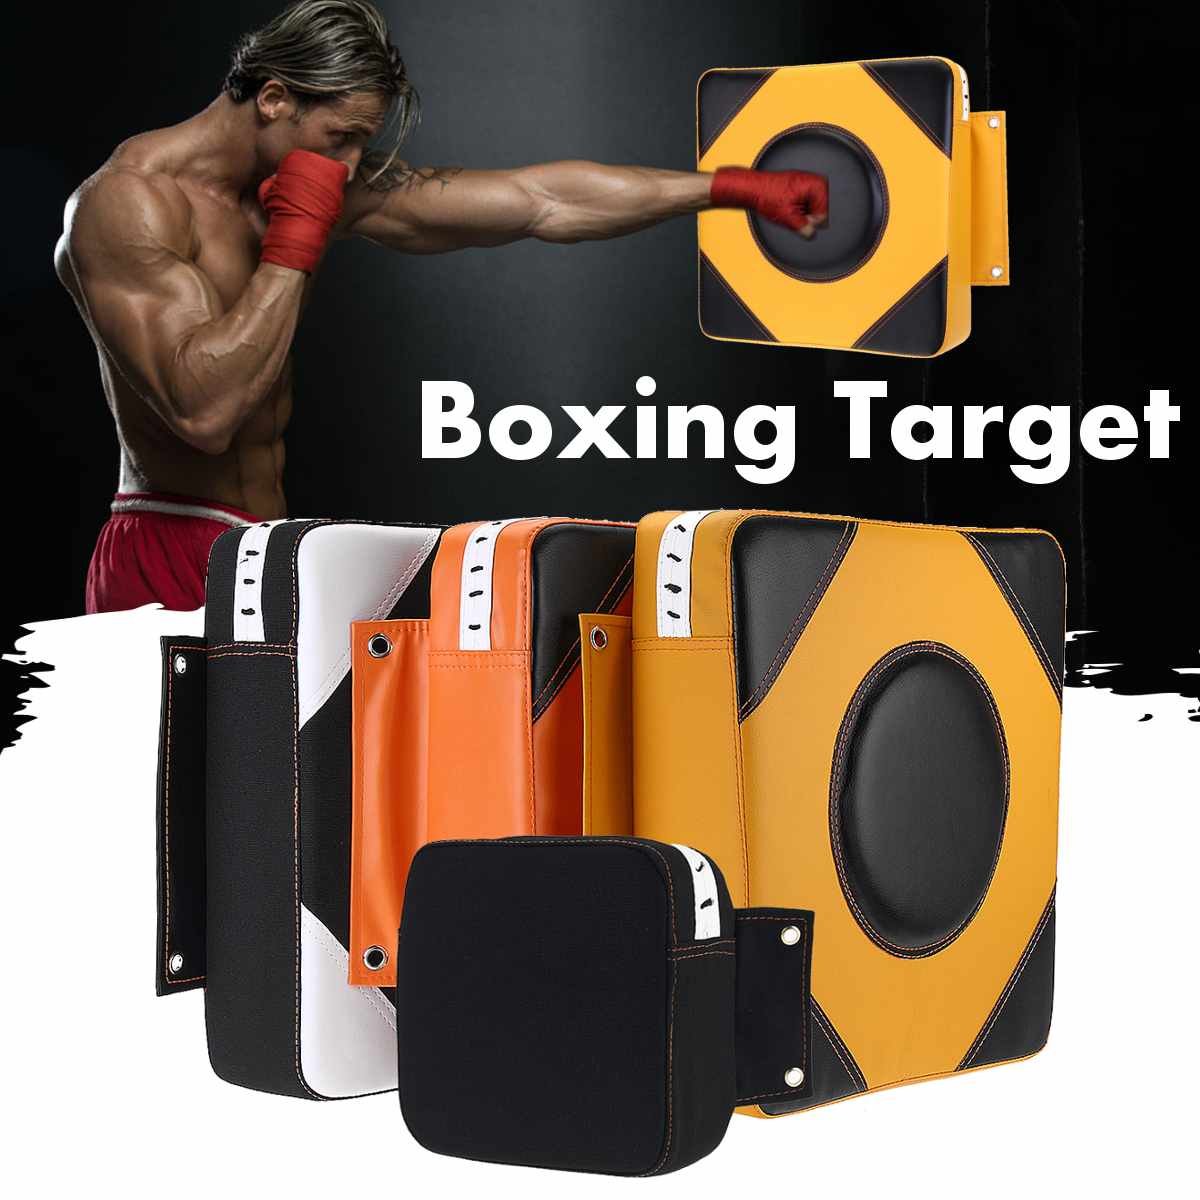 Punch Boxing Bag Wall Mount Punching Target Pad For Wing Chun Taekwondo Training 